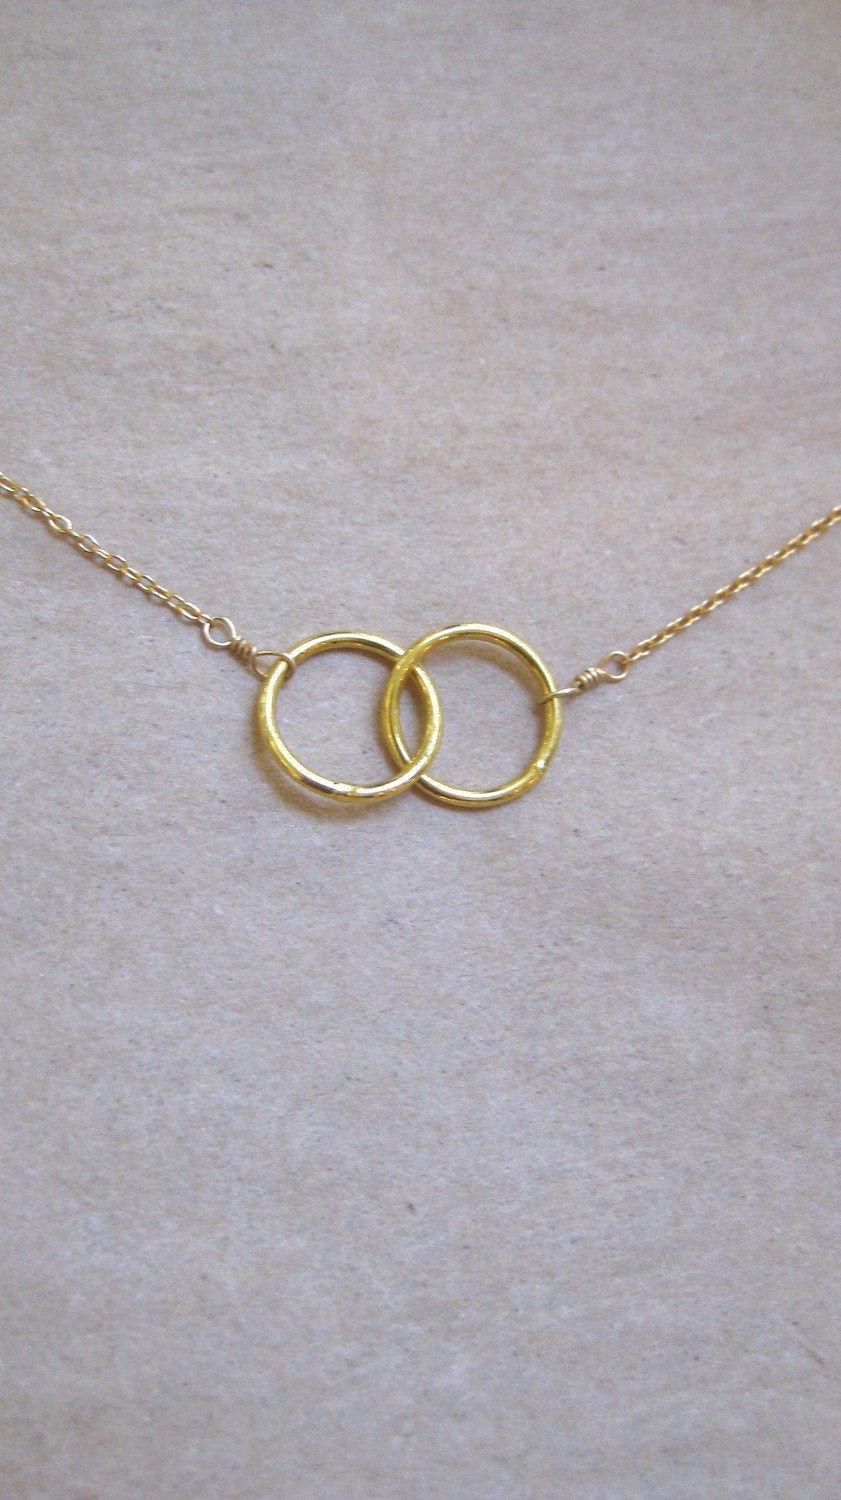 Interlocking Circle Necklace
 two interlocking gold circles necklace by studioro on Etsy